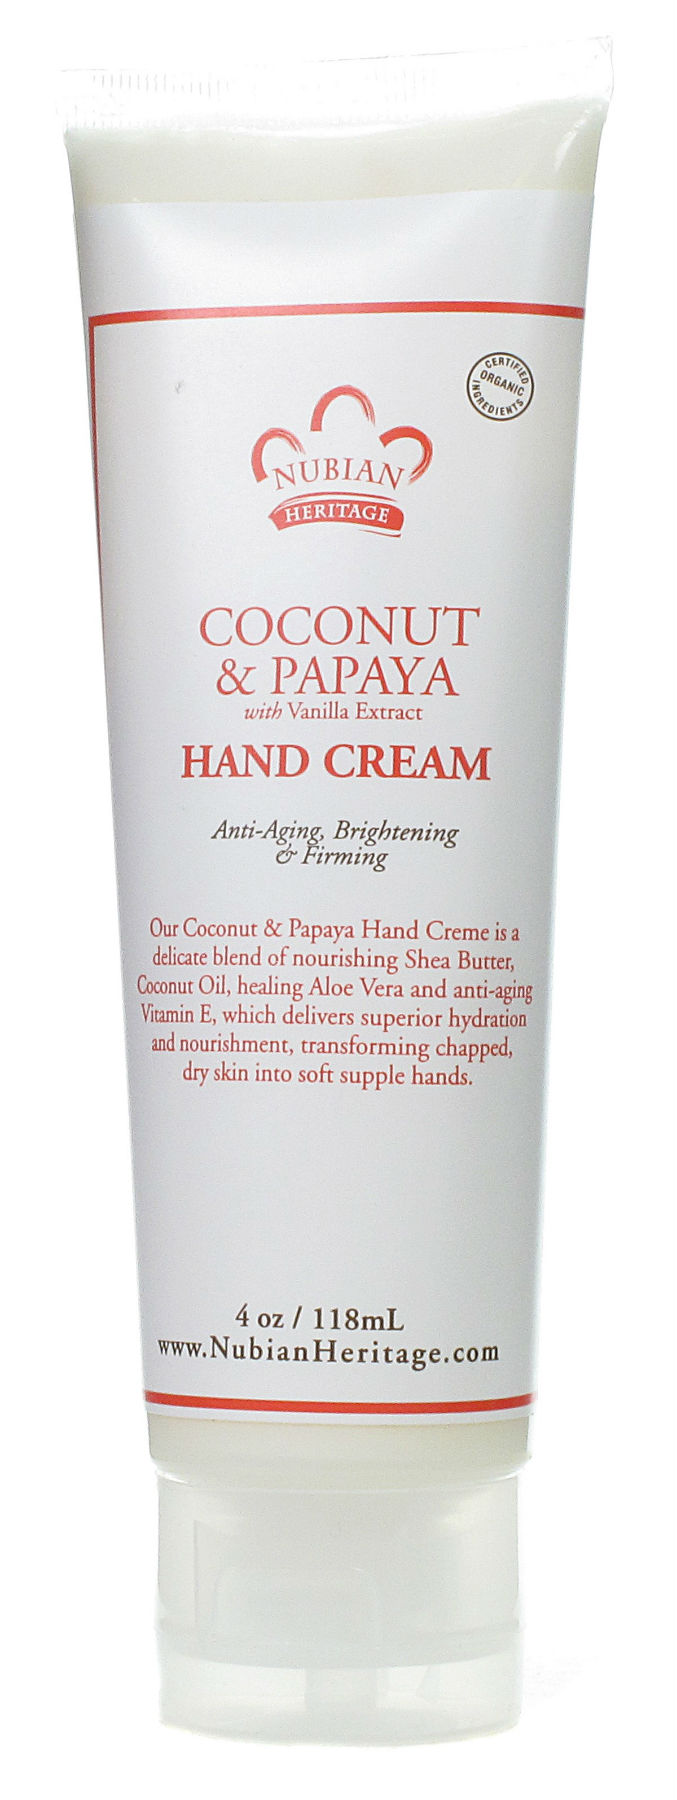 NUBIAN HERITAGE/SUNDIAL CREATIONS: Hand Cream Coconut and Papaya 4 oz